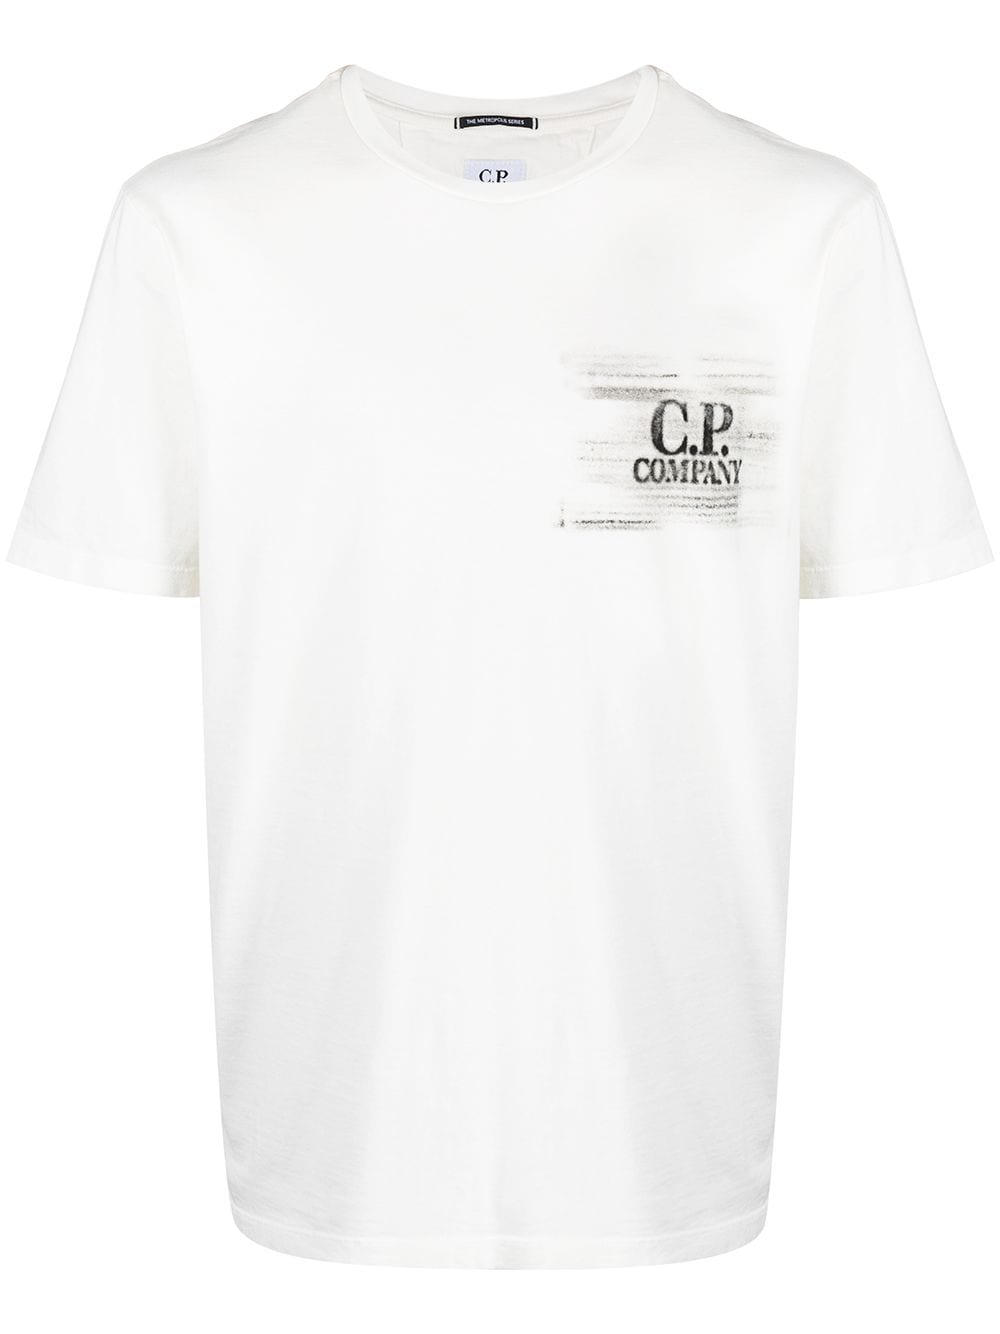 C.P. COMPANY Metropolis Series Logo T-Shirt White - MAISONDEFASHION.COM